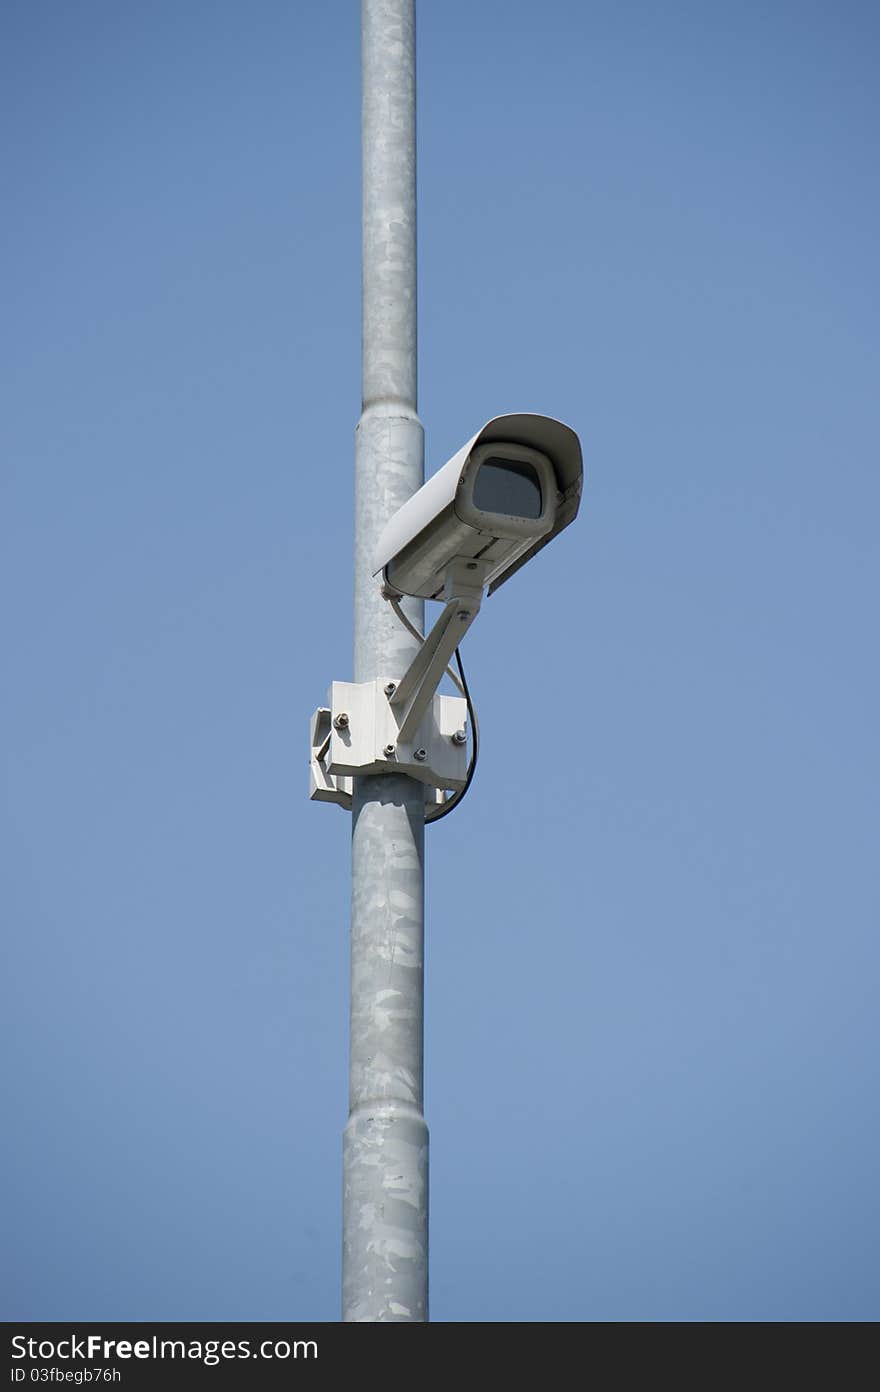 Surveillance camera on a pole. Surveillance camera on a pole